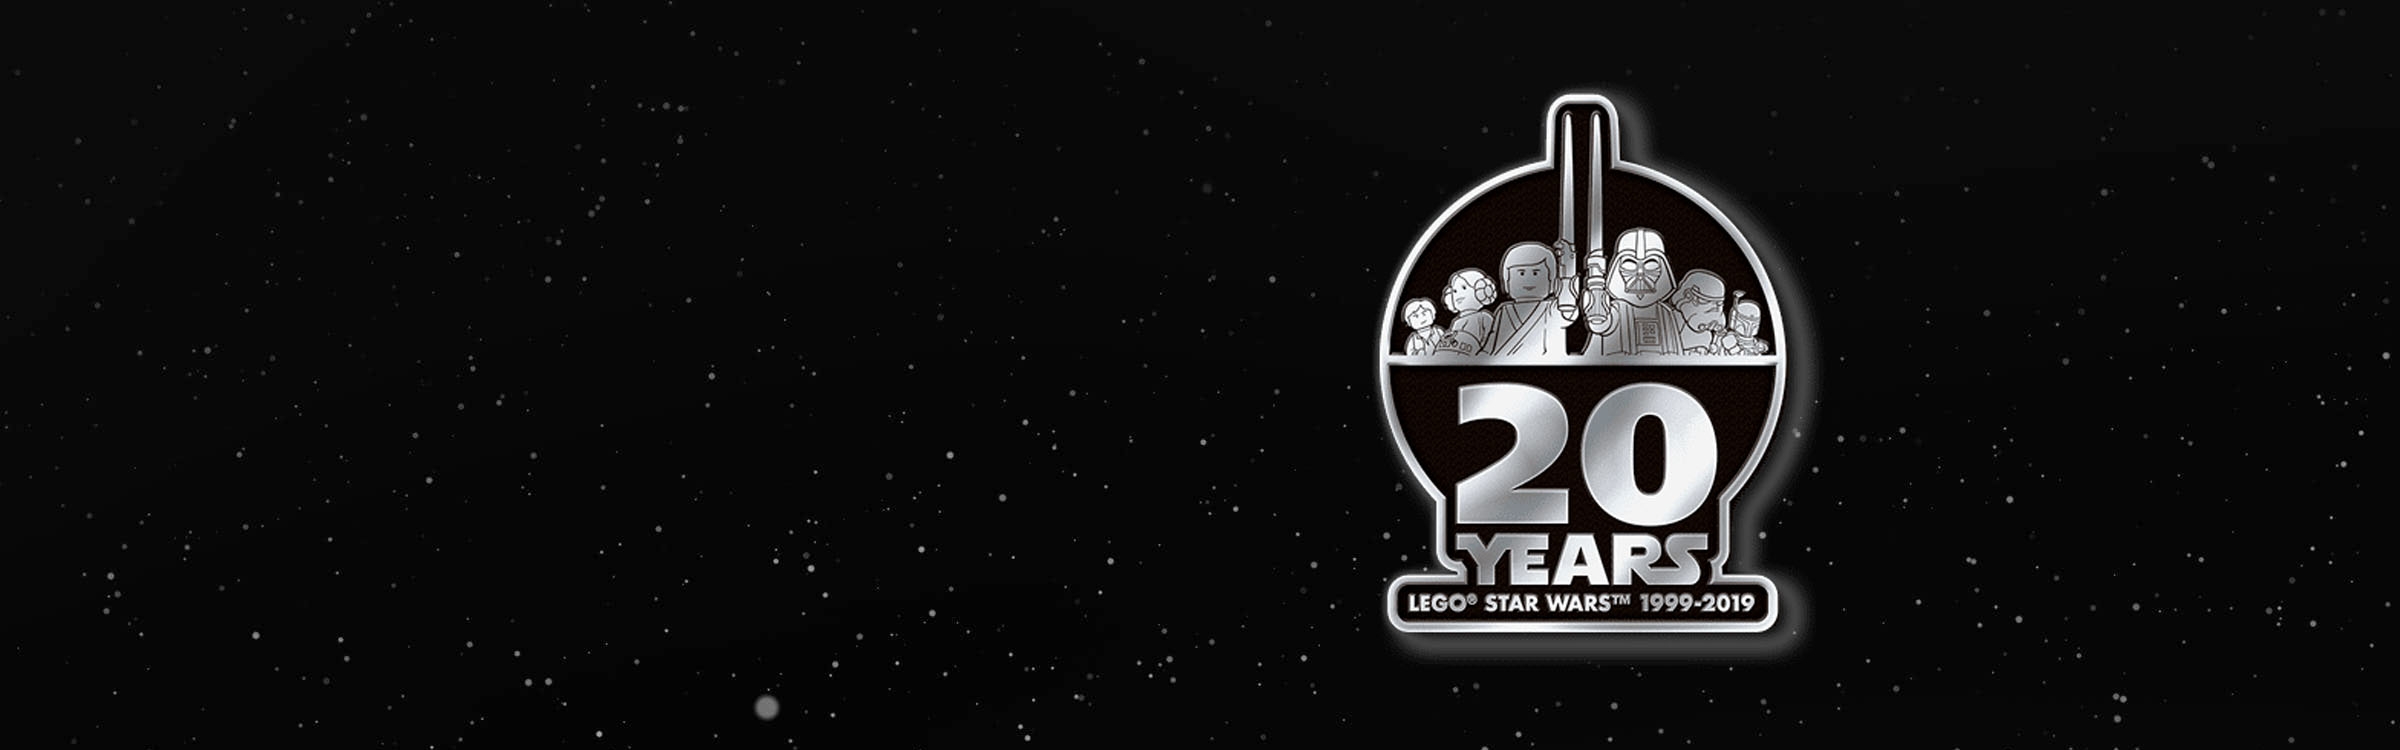 20 years lego star wars